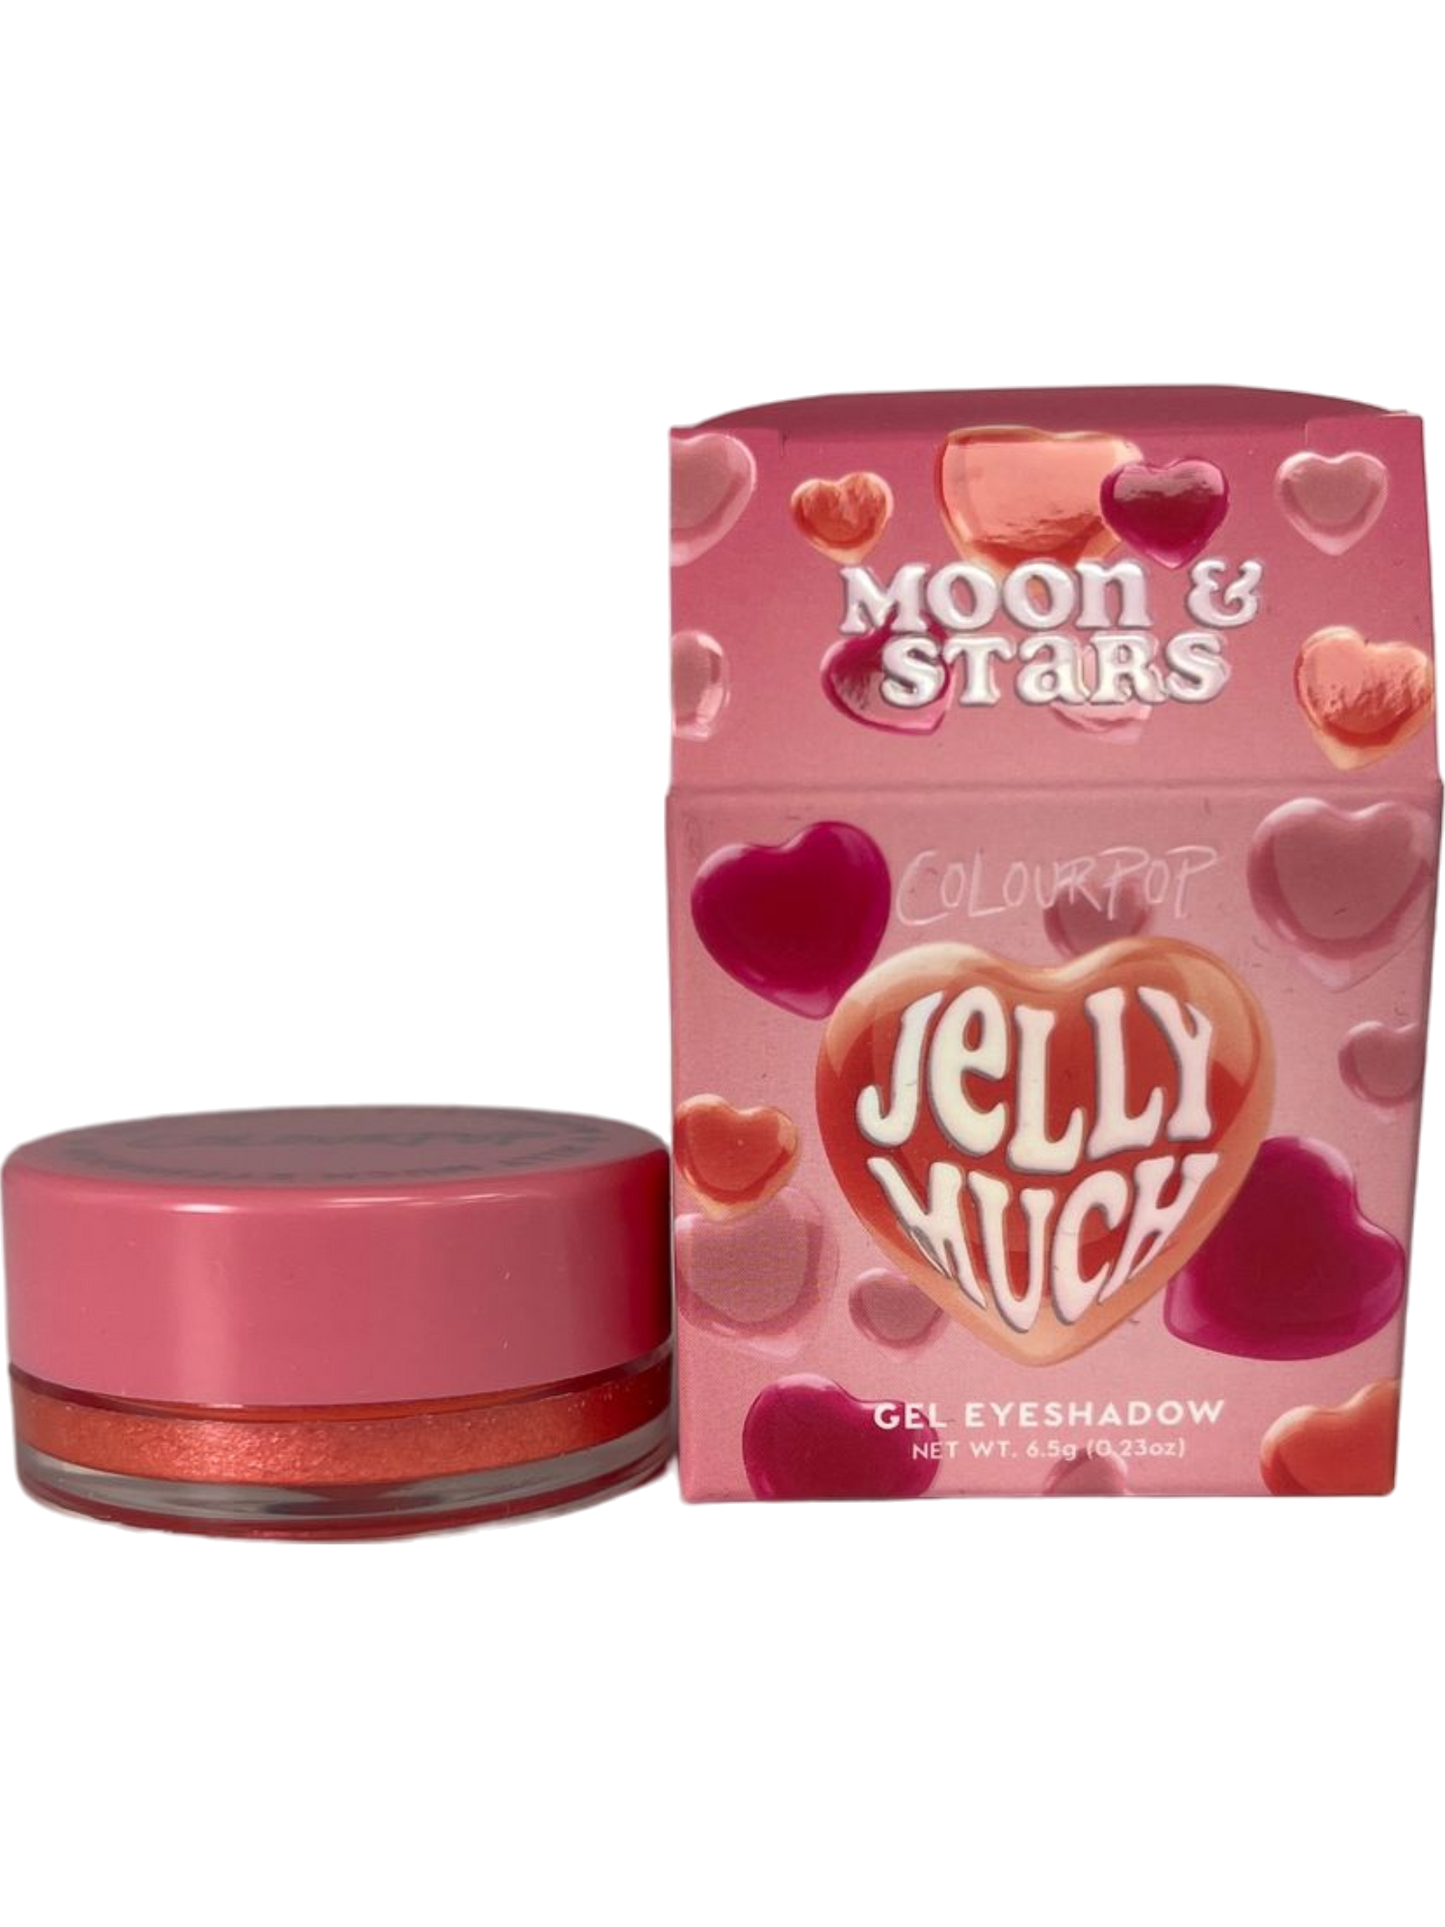 ColourPop Pink Jelly Much Gel Eyeshadow Moon & Stars